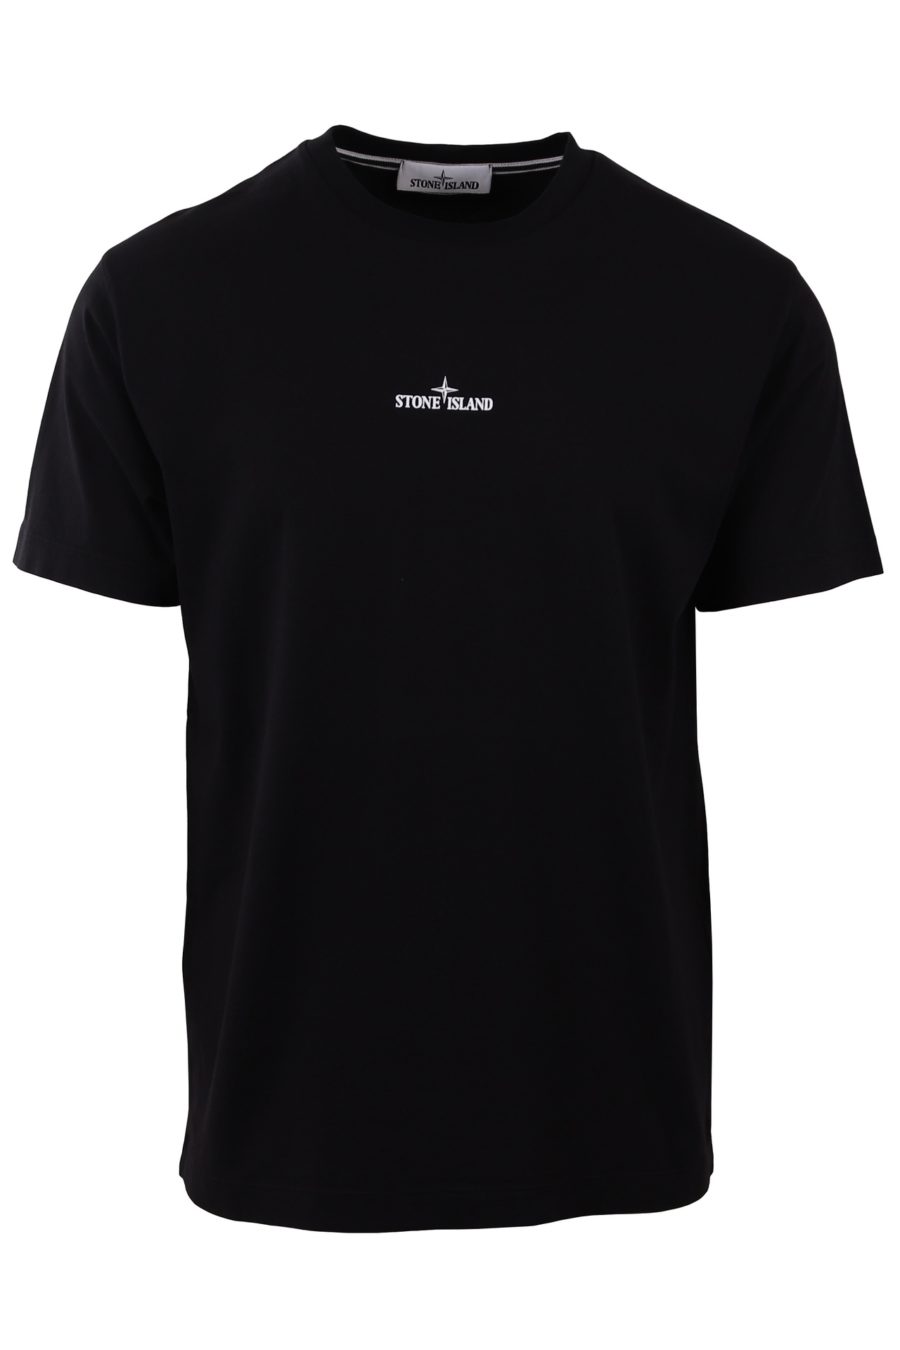 T-shirt Stone Island schwarz mit kleinem Logo - 484ec5245b02be6e1766d9ccbe2ce30e5fd79b44